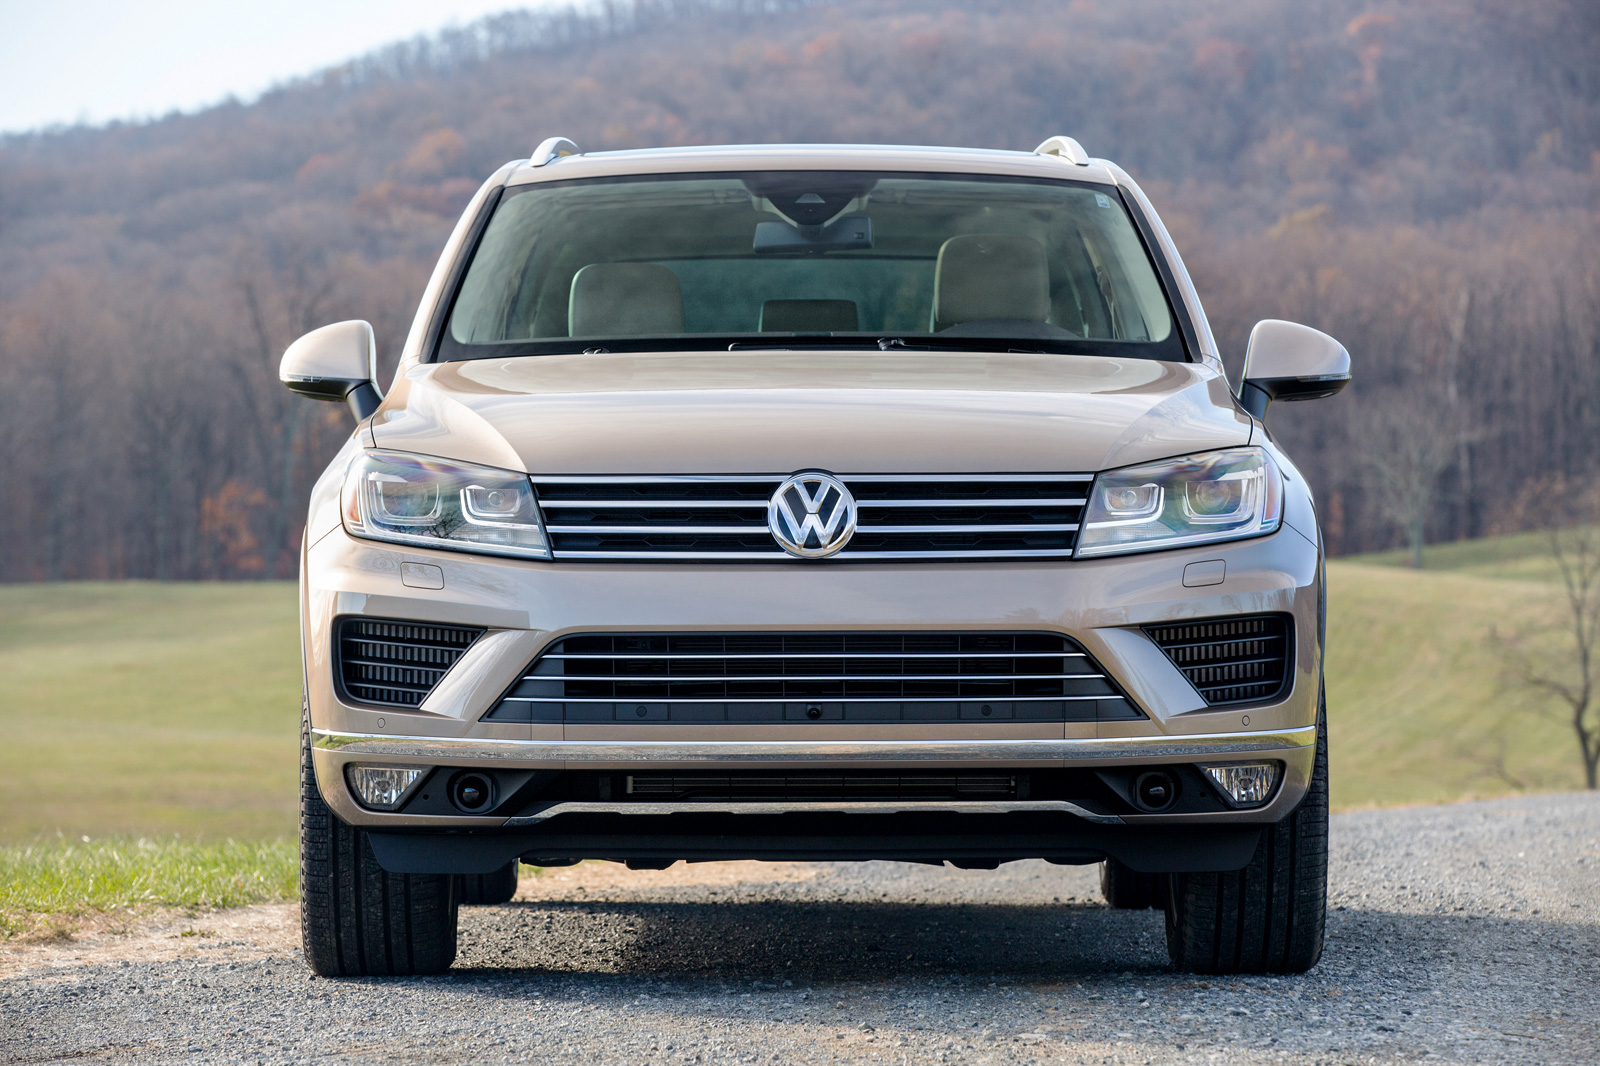 2016 Volkswagen Touareg Price Cut, Hybrid Axed